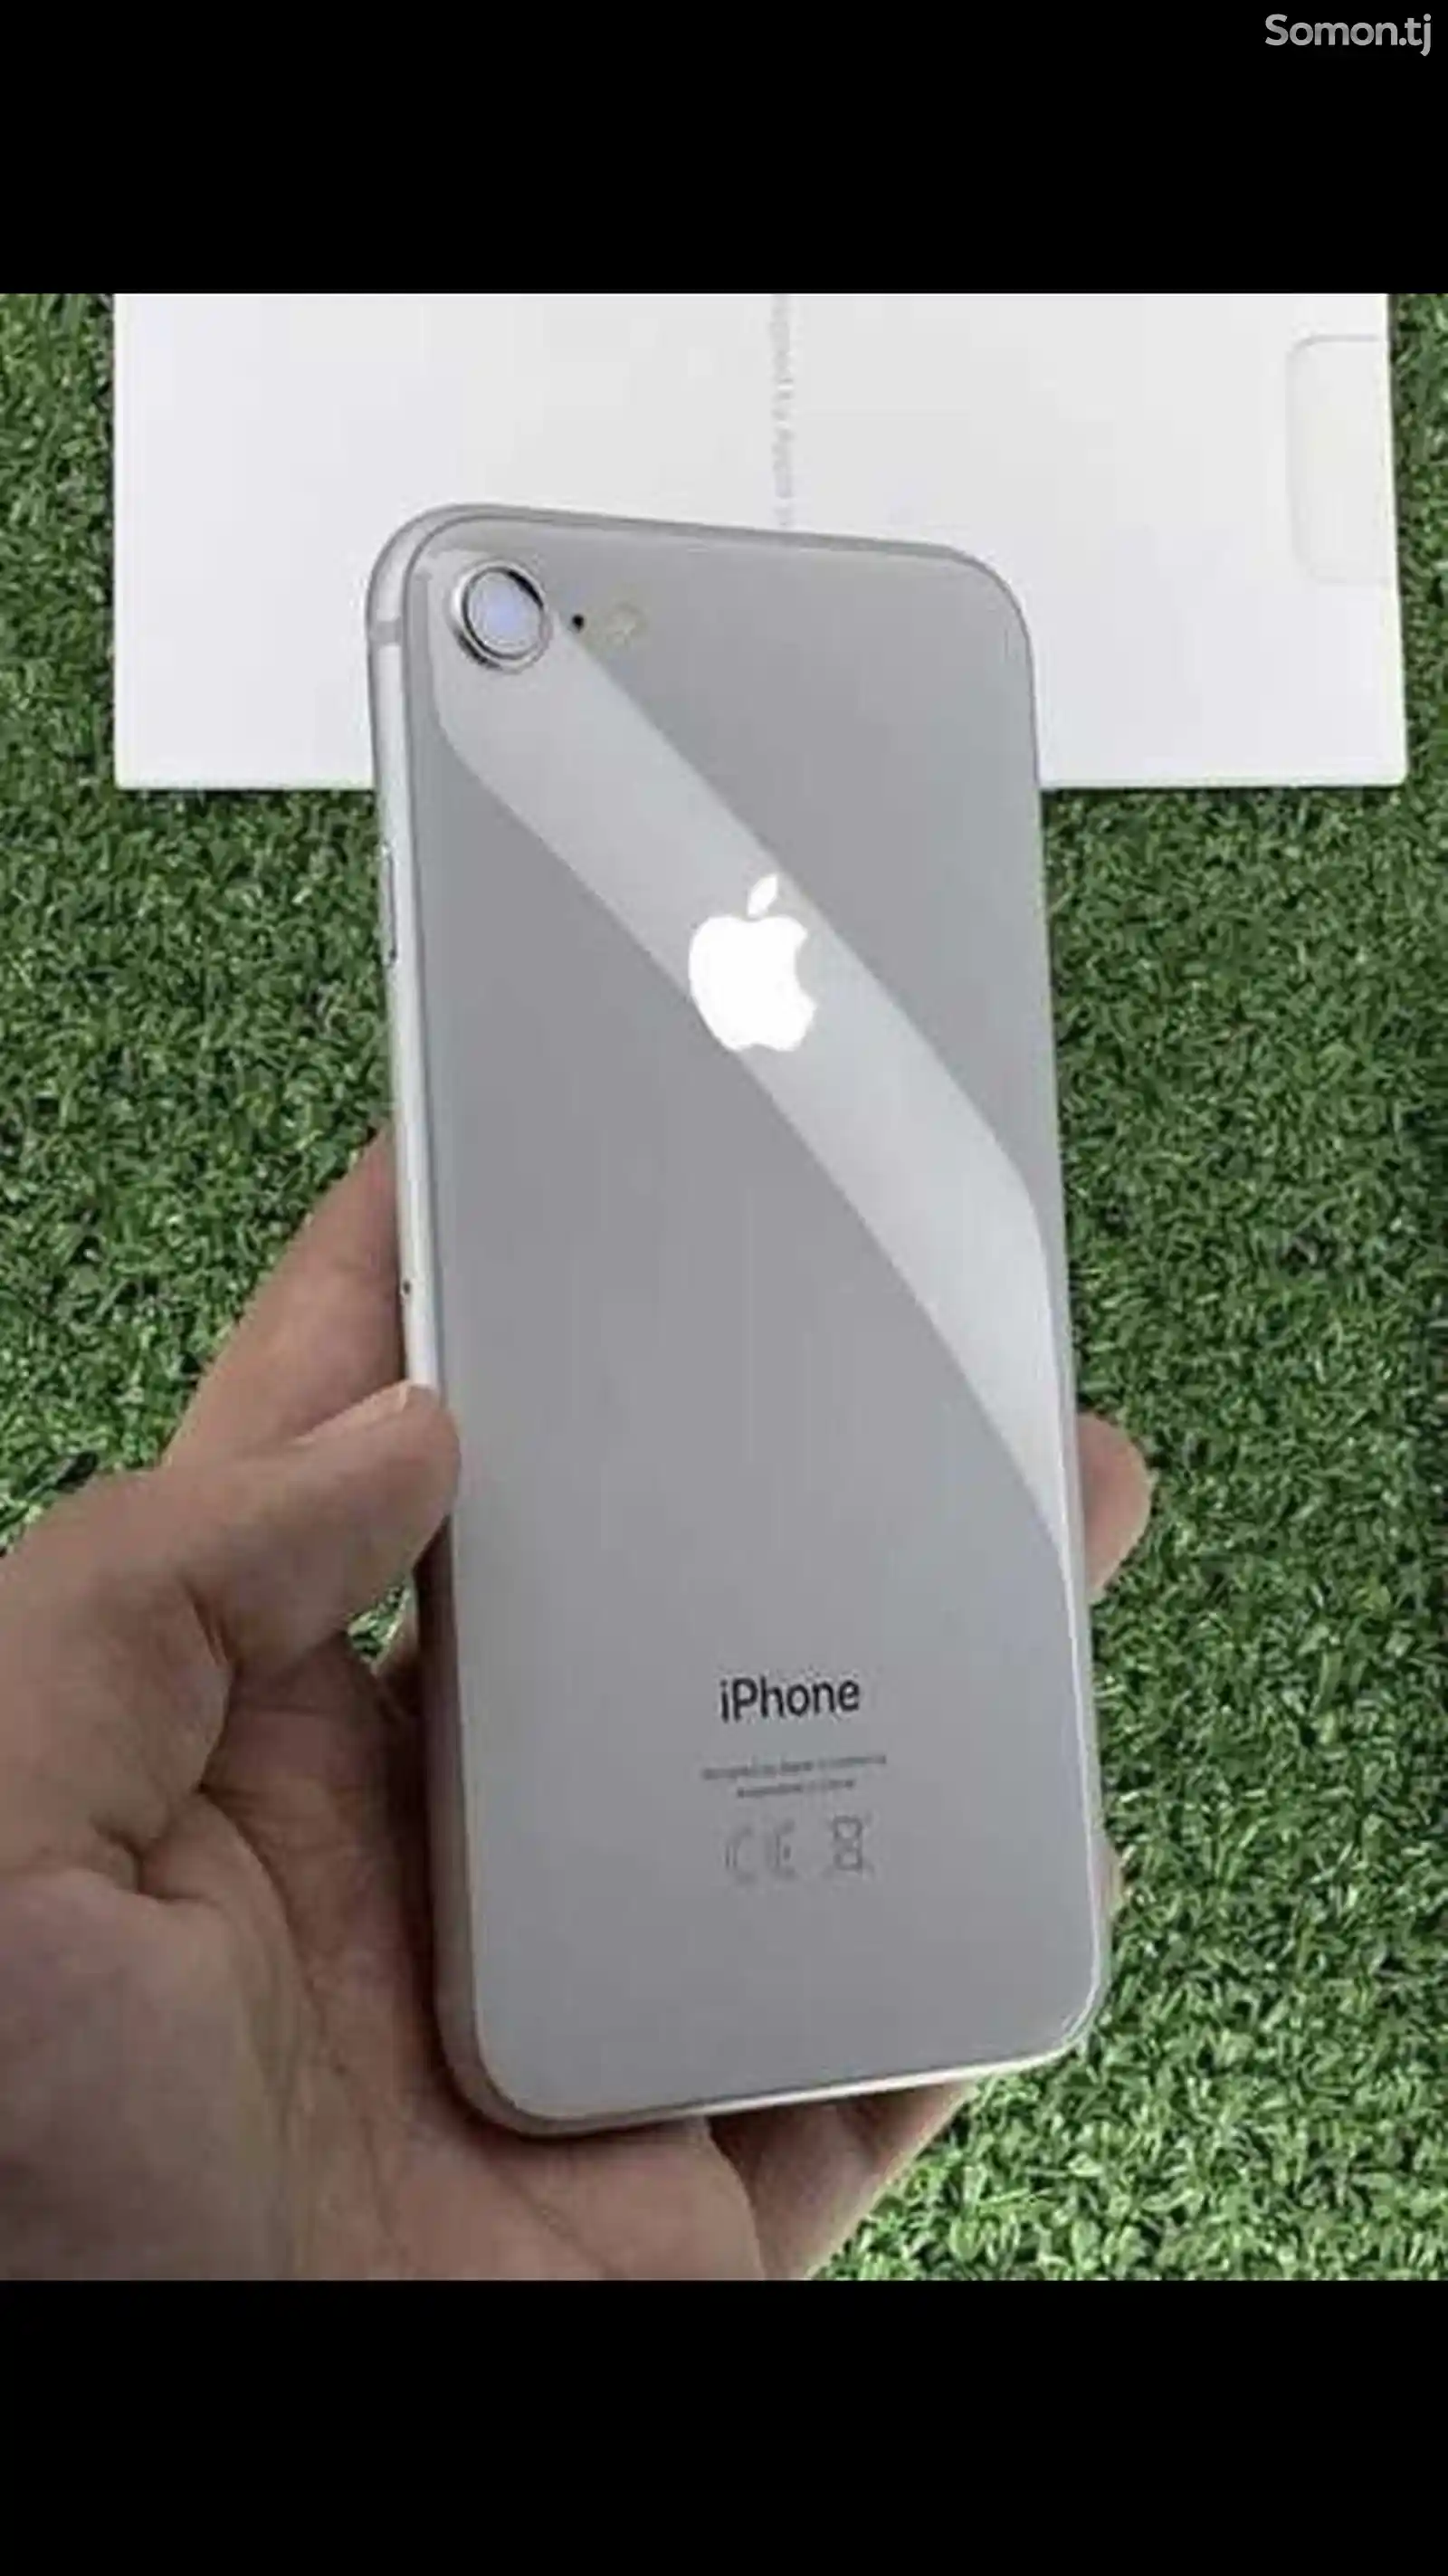 Apple iPhone 8, 64 gb, Silver